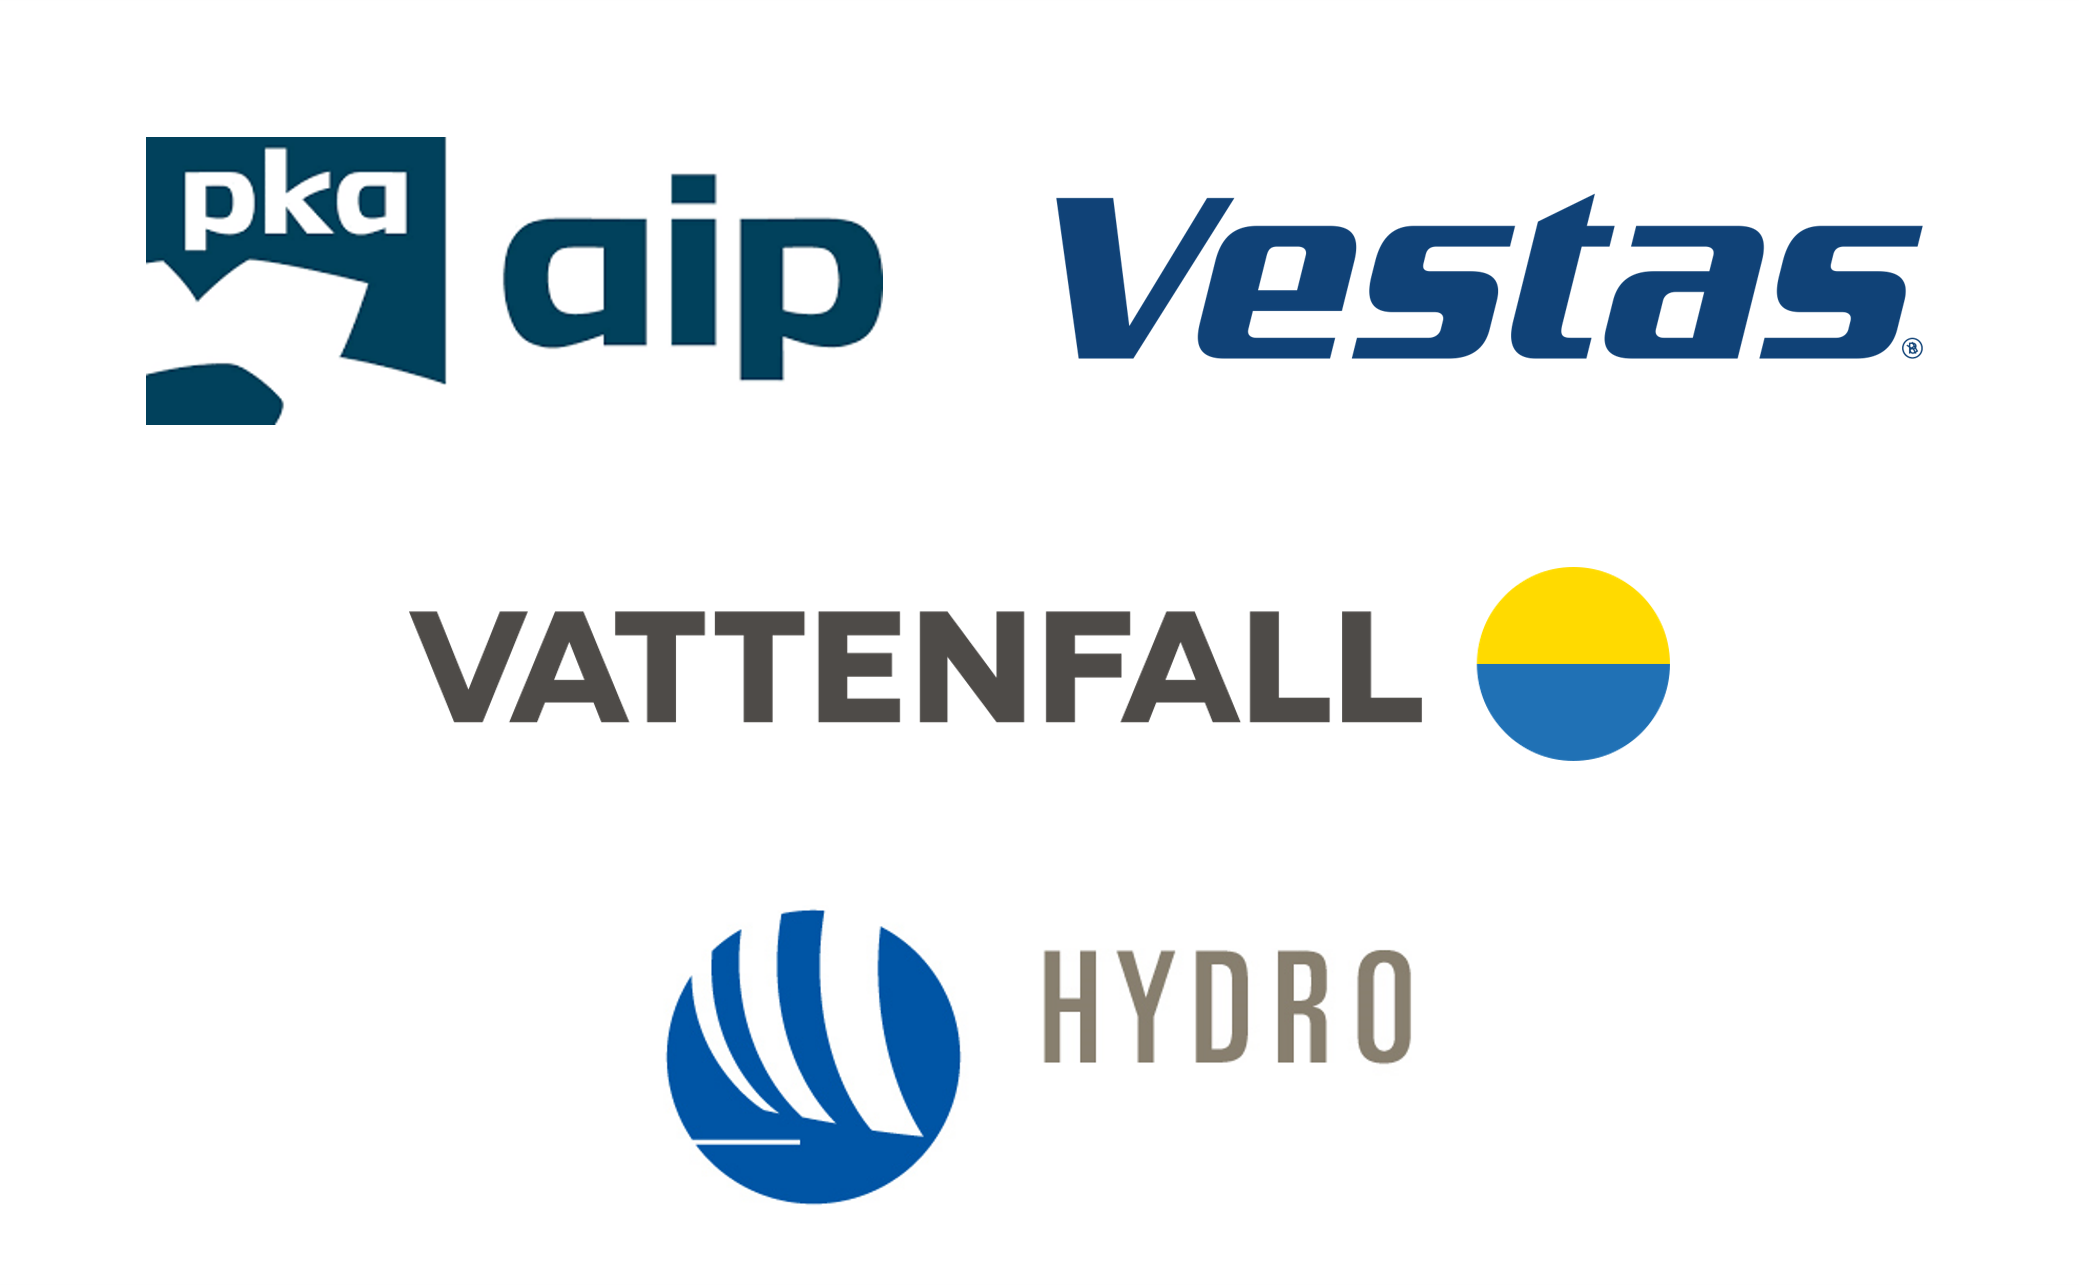 PKA AIP & Vestas & Vattenfall & Hydro